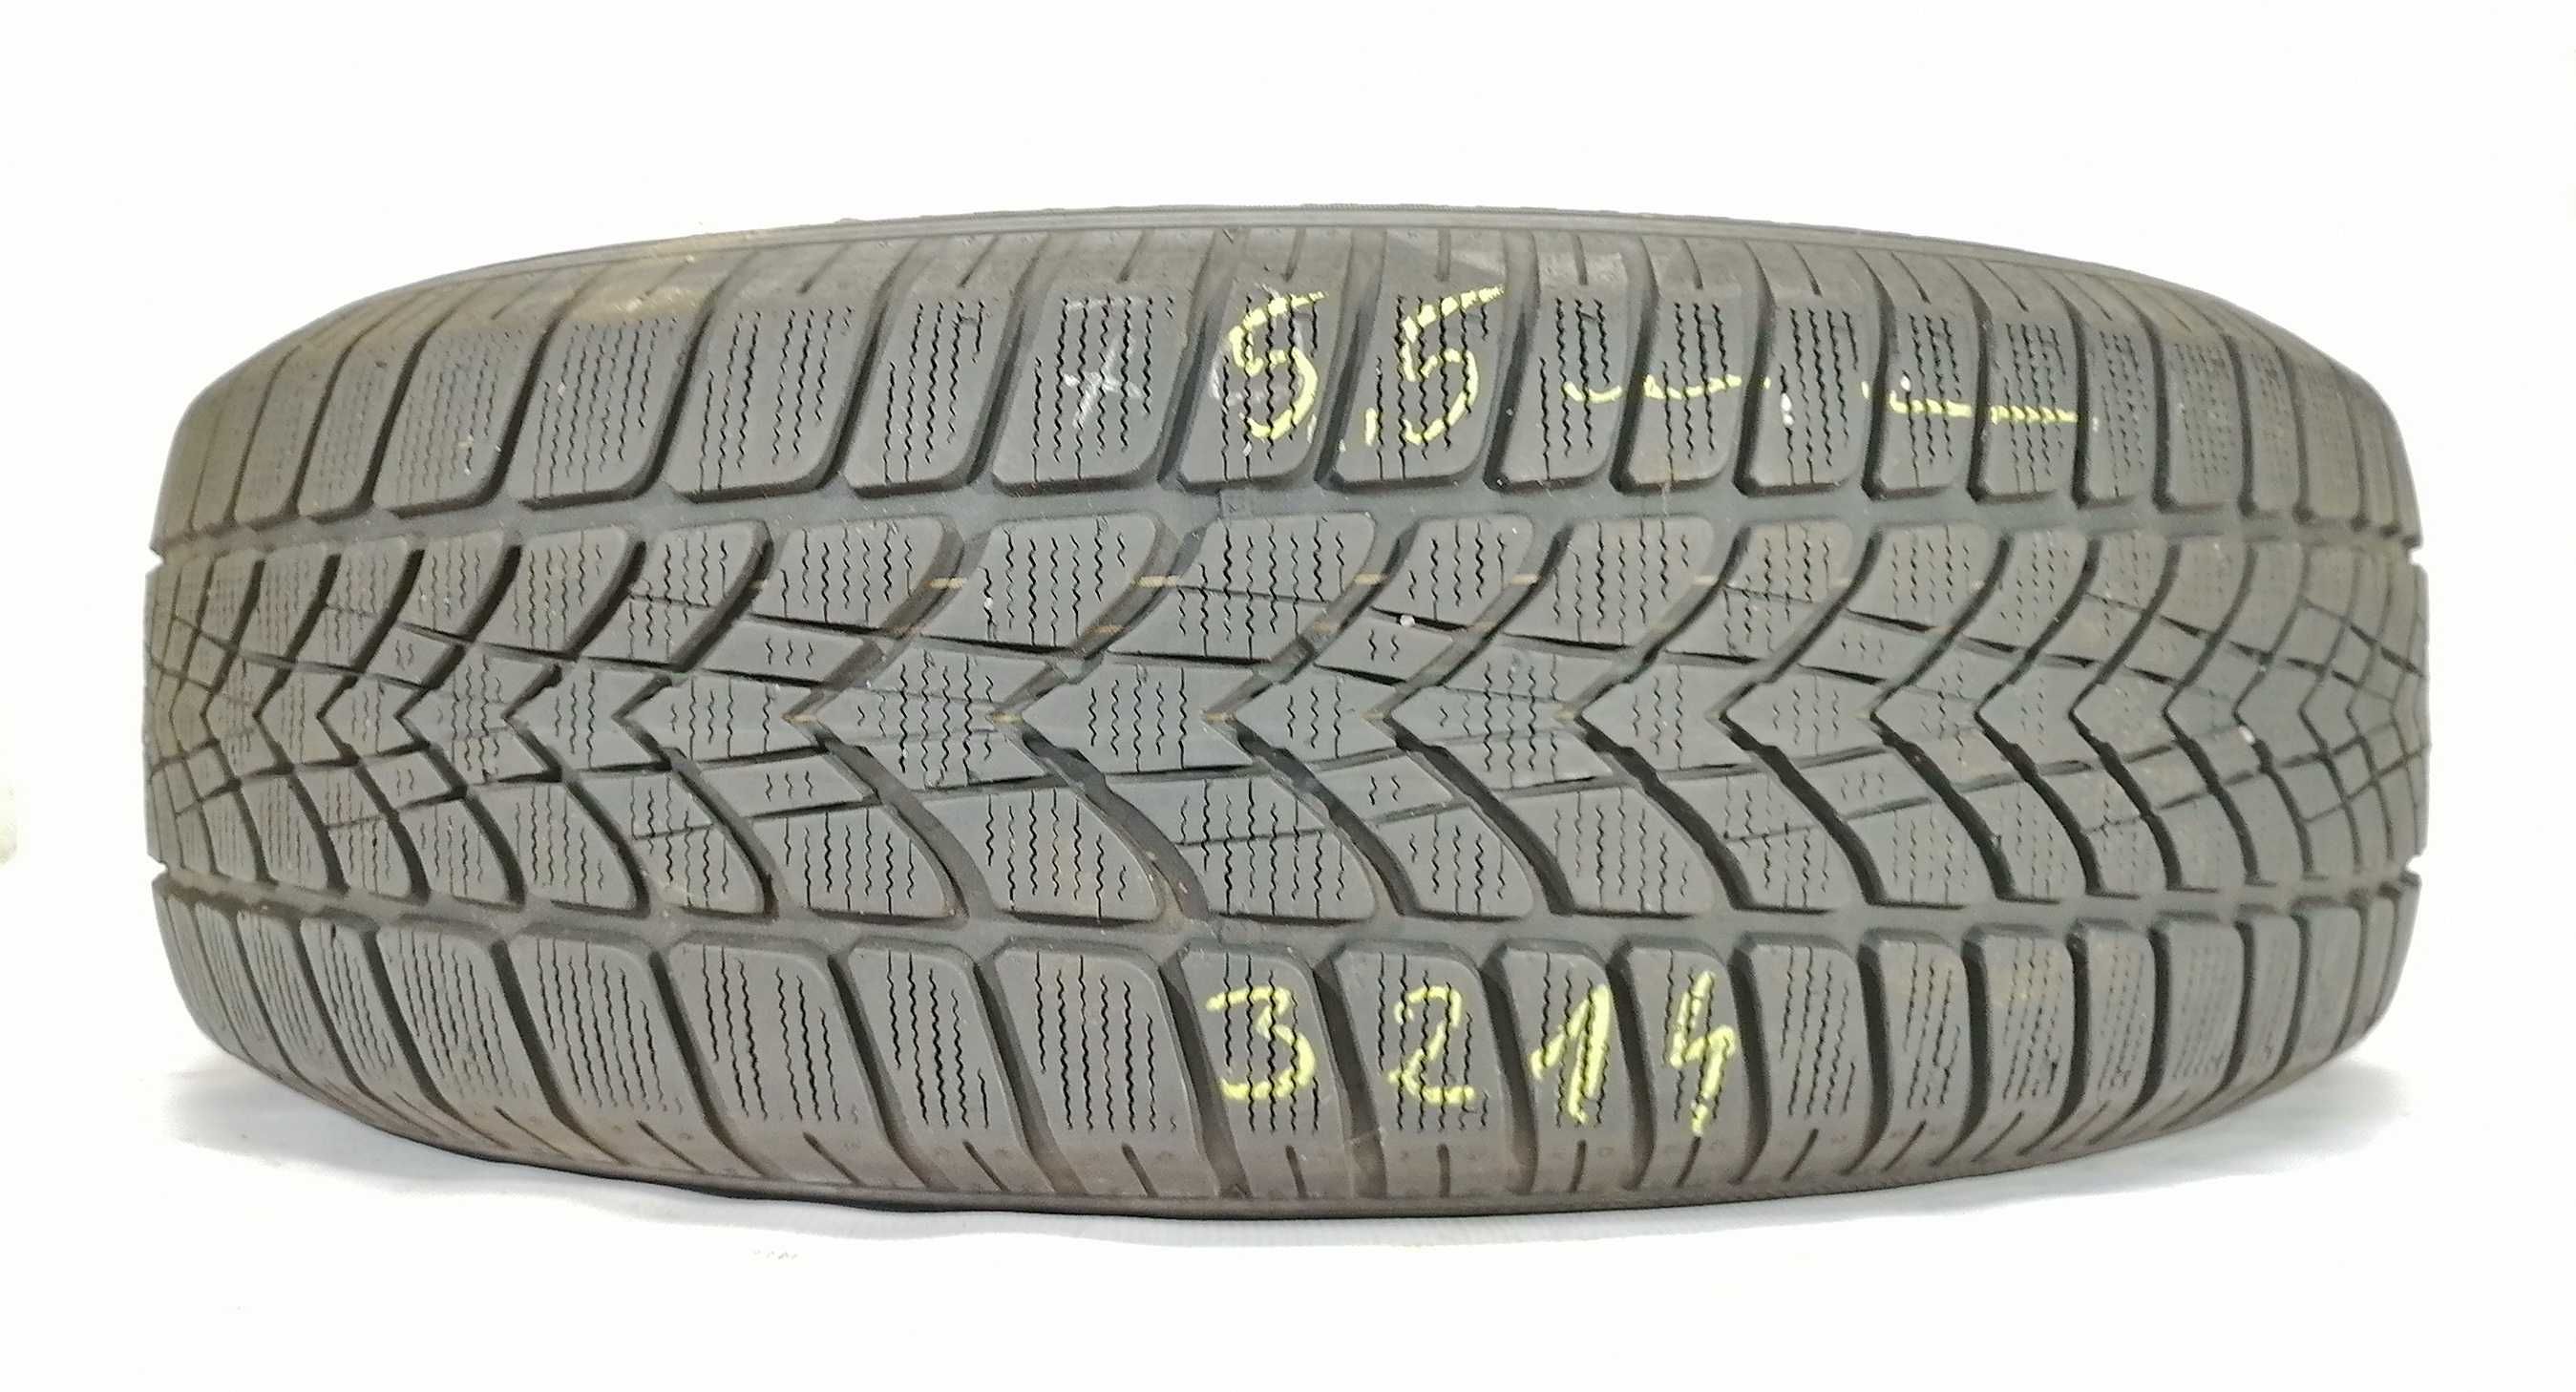 2x 225/65 R17 Dunlop Sport 4D opony zimowe 6,5 mm / montaż